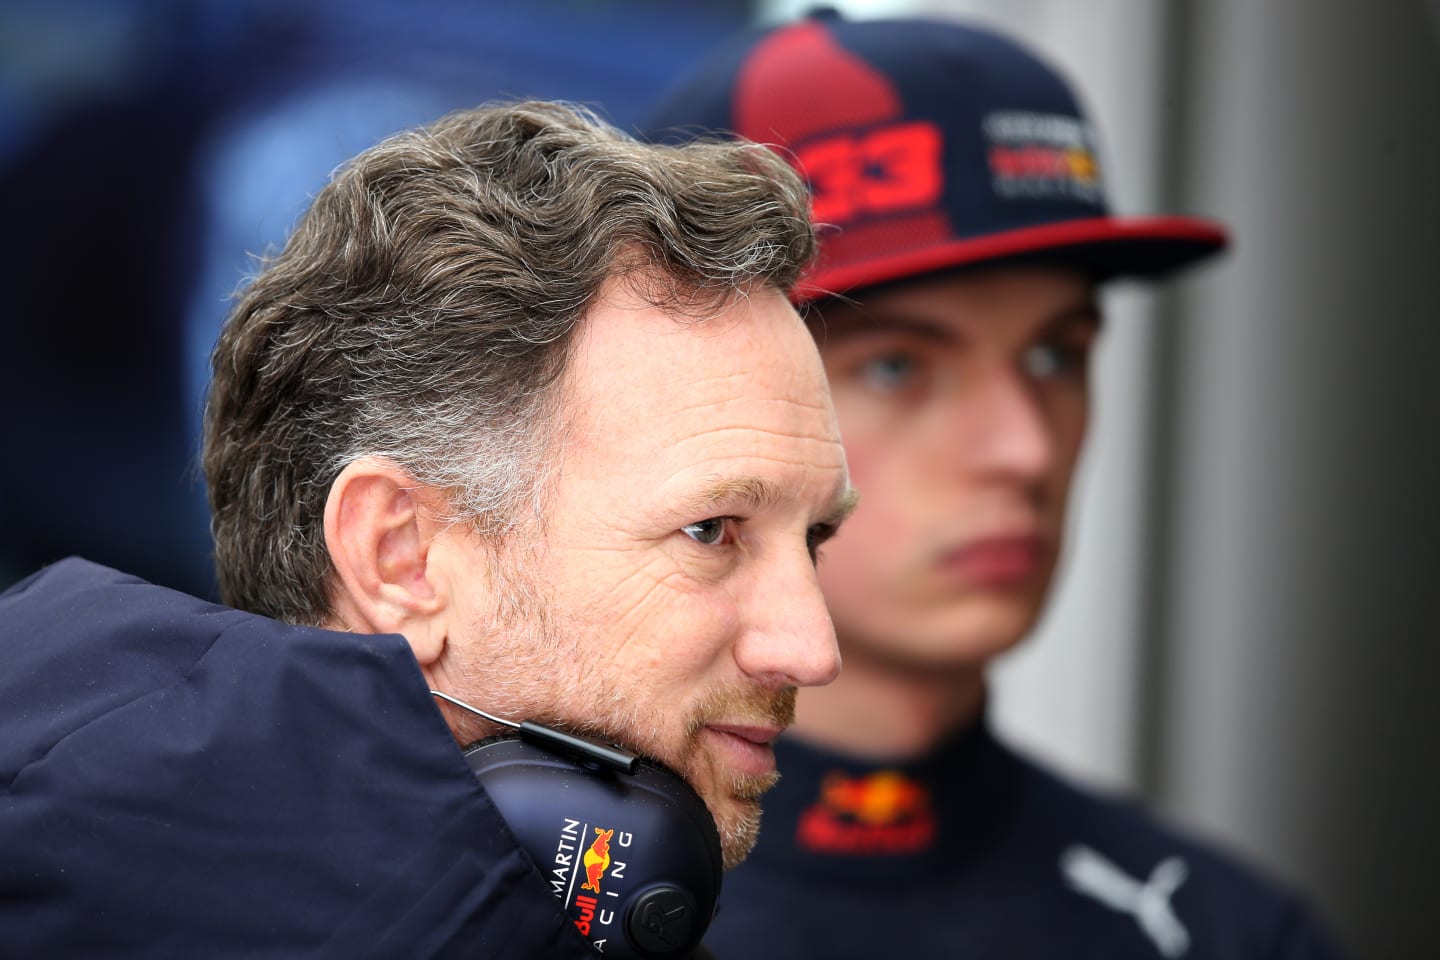 BARCELONA, SPAIN - FEBRUARY 27: Red Bull Racing Team Principal Christian Horner and Max Verstappen